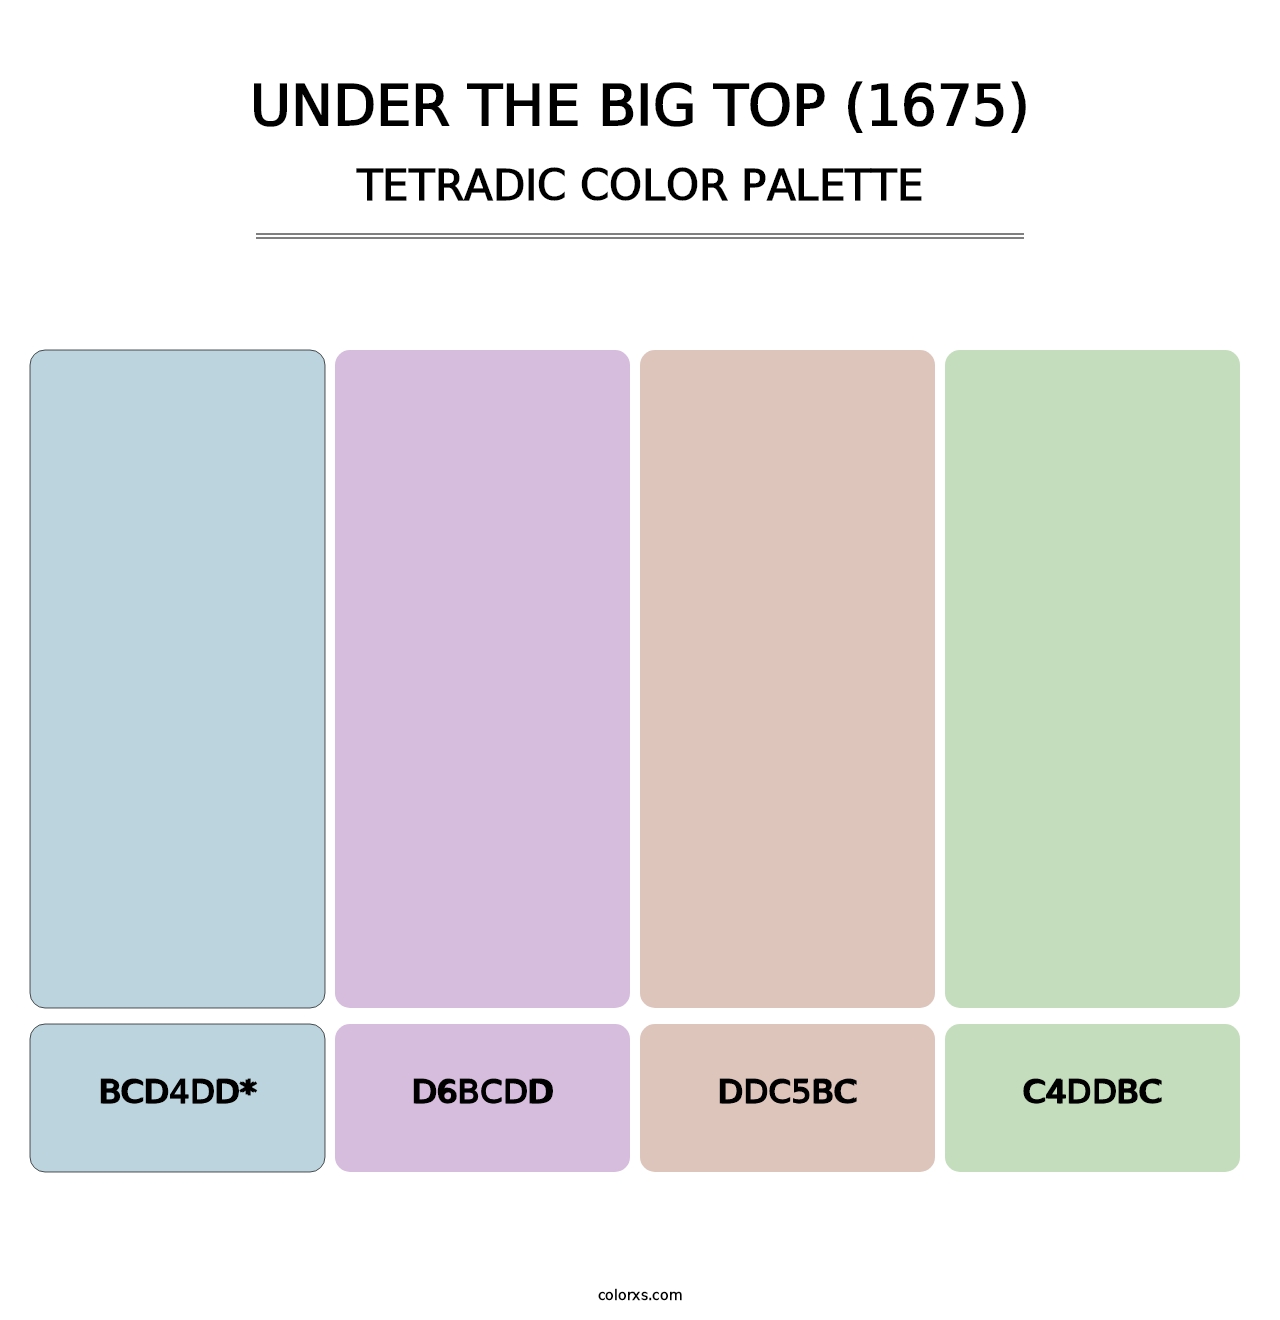 Under the Big Top (1675) - Tetradic Color Palette